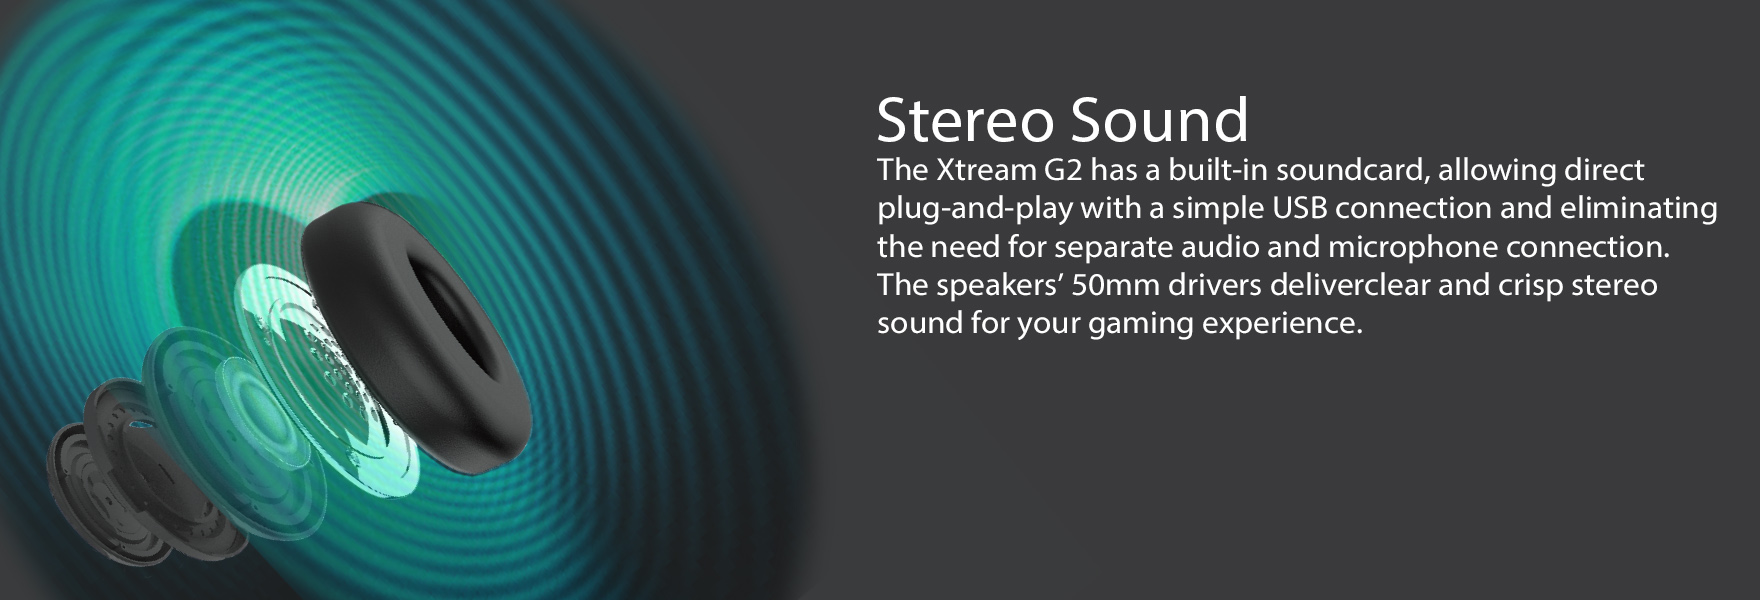 Casque d'écoute Adesso Xtream Stereo USB - Avec Micro - Coop HEC Montréal